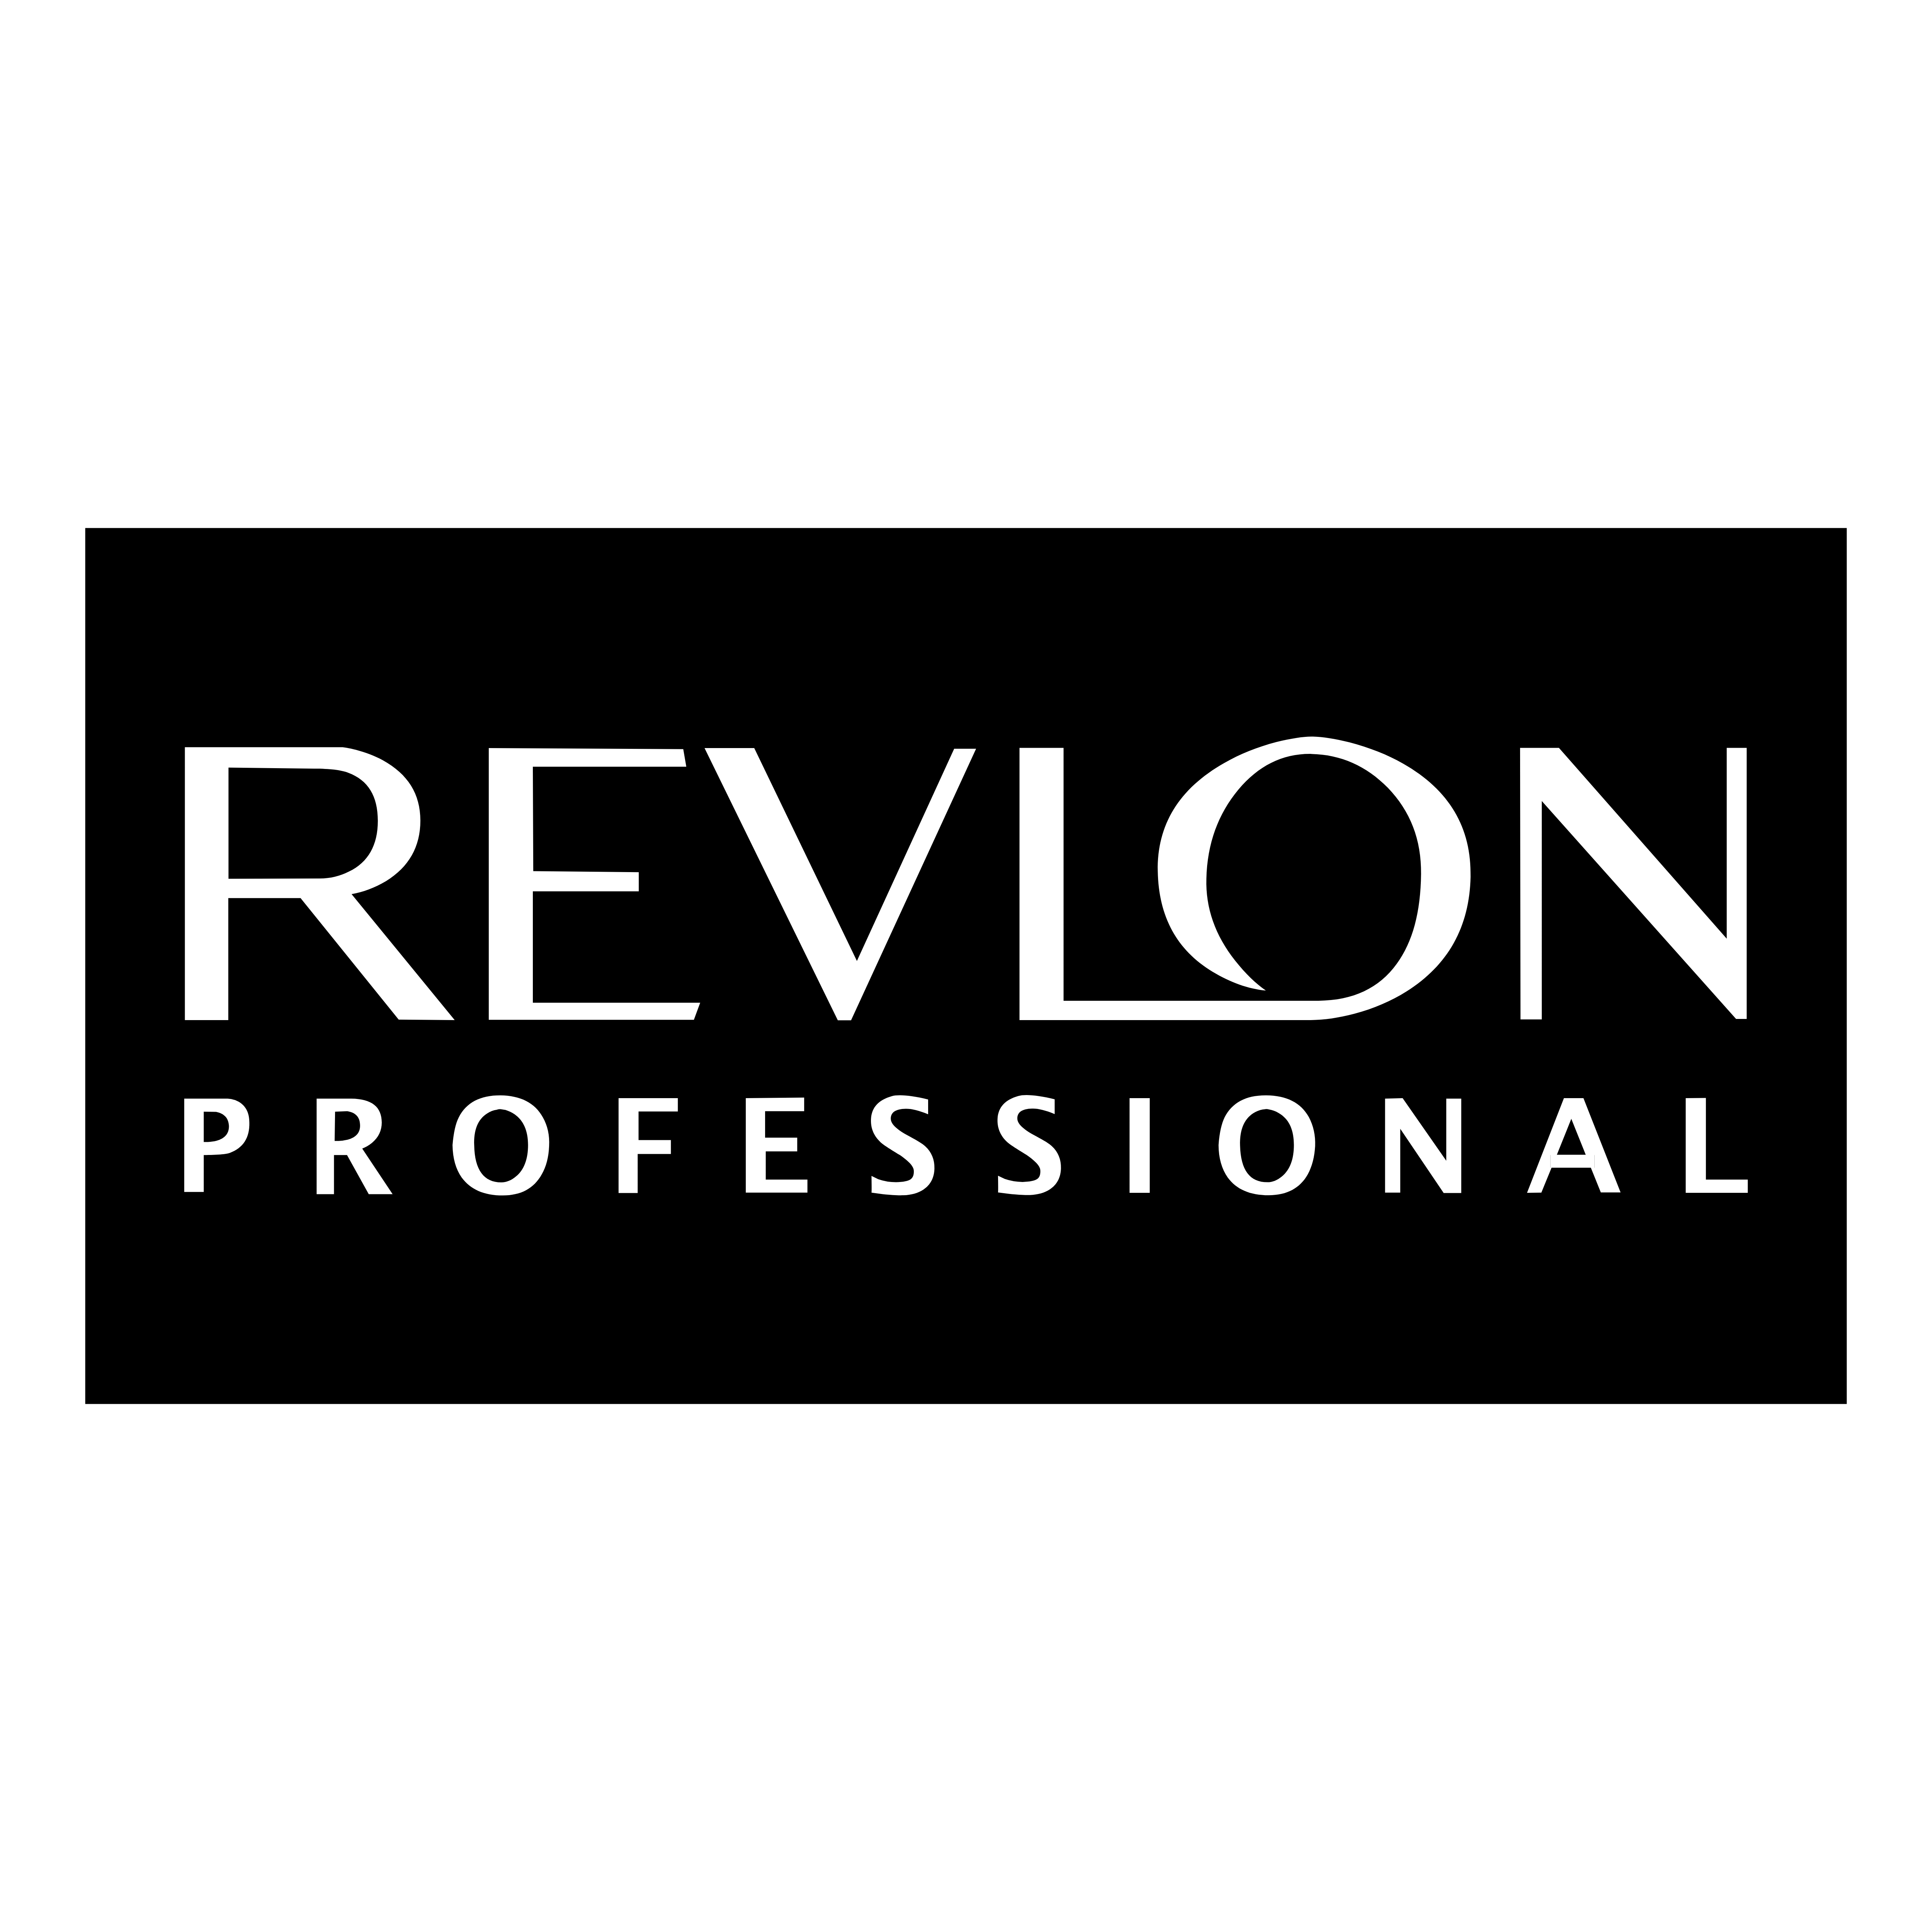 10 Benefits - Revlon Professi